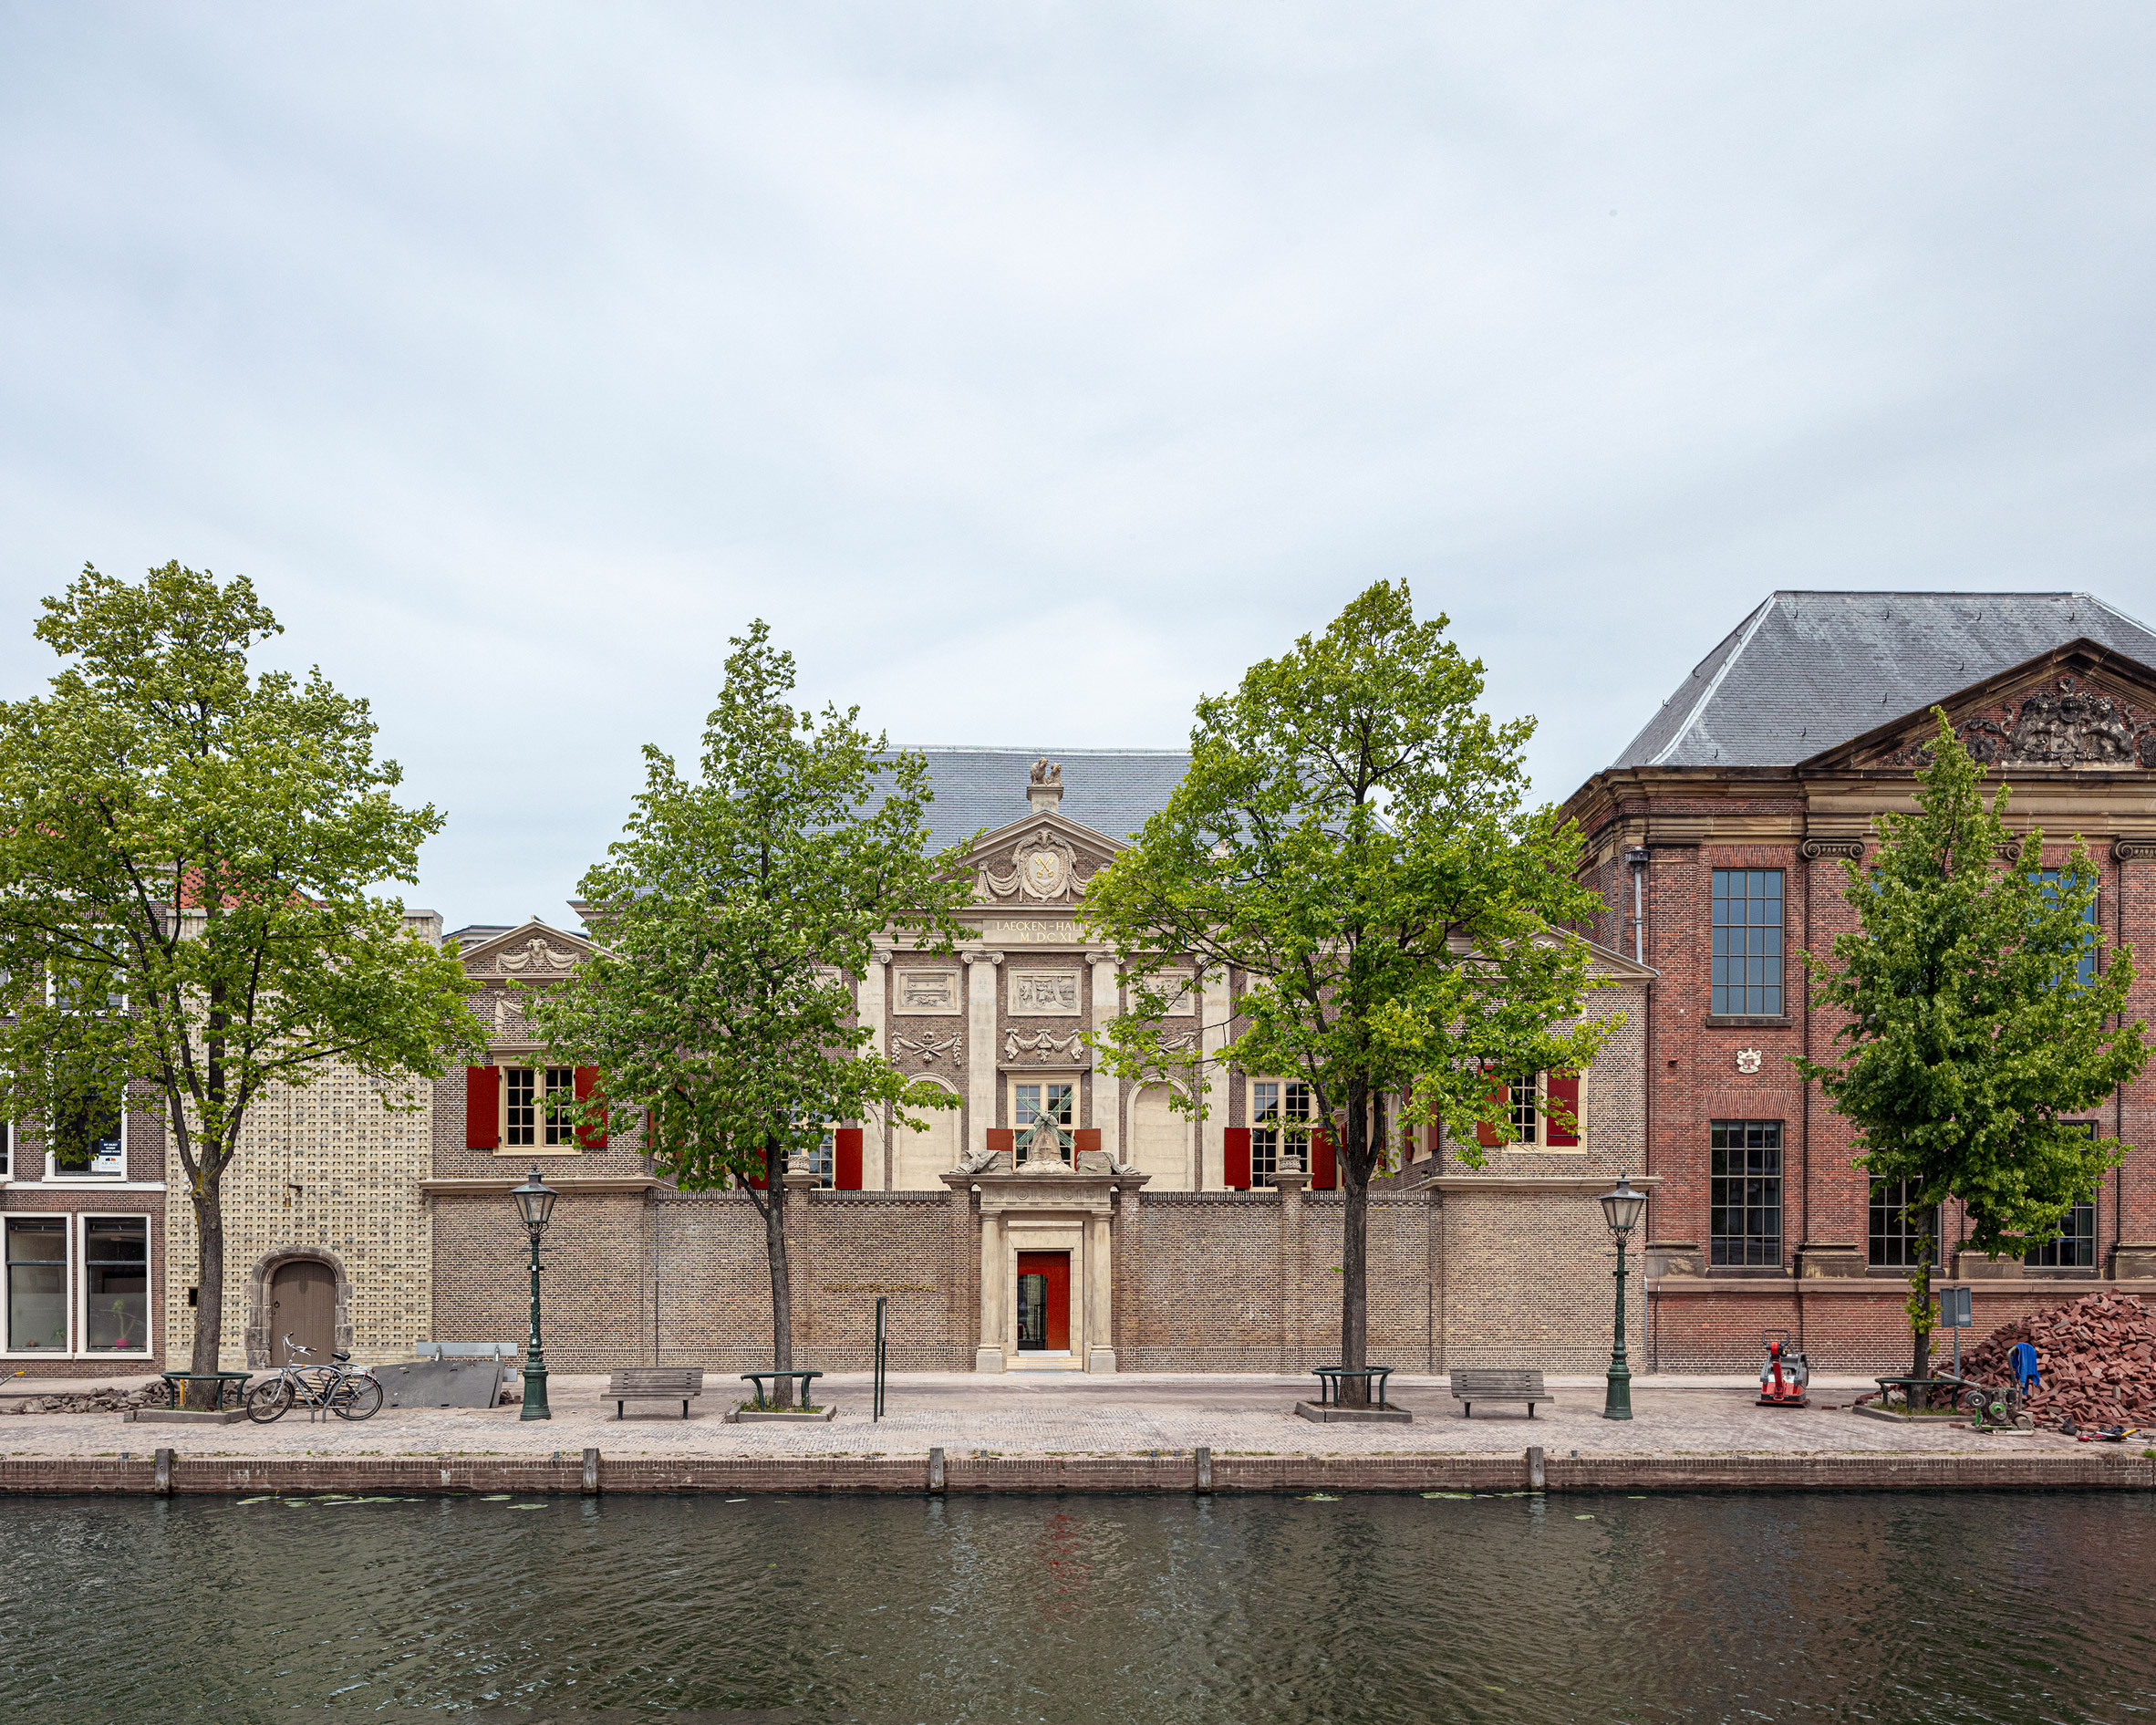 Museum de Lakenhal by Happel Cornelisse Verhoeven and Julian Harrap Architects